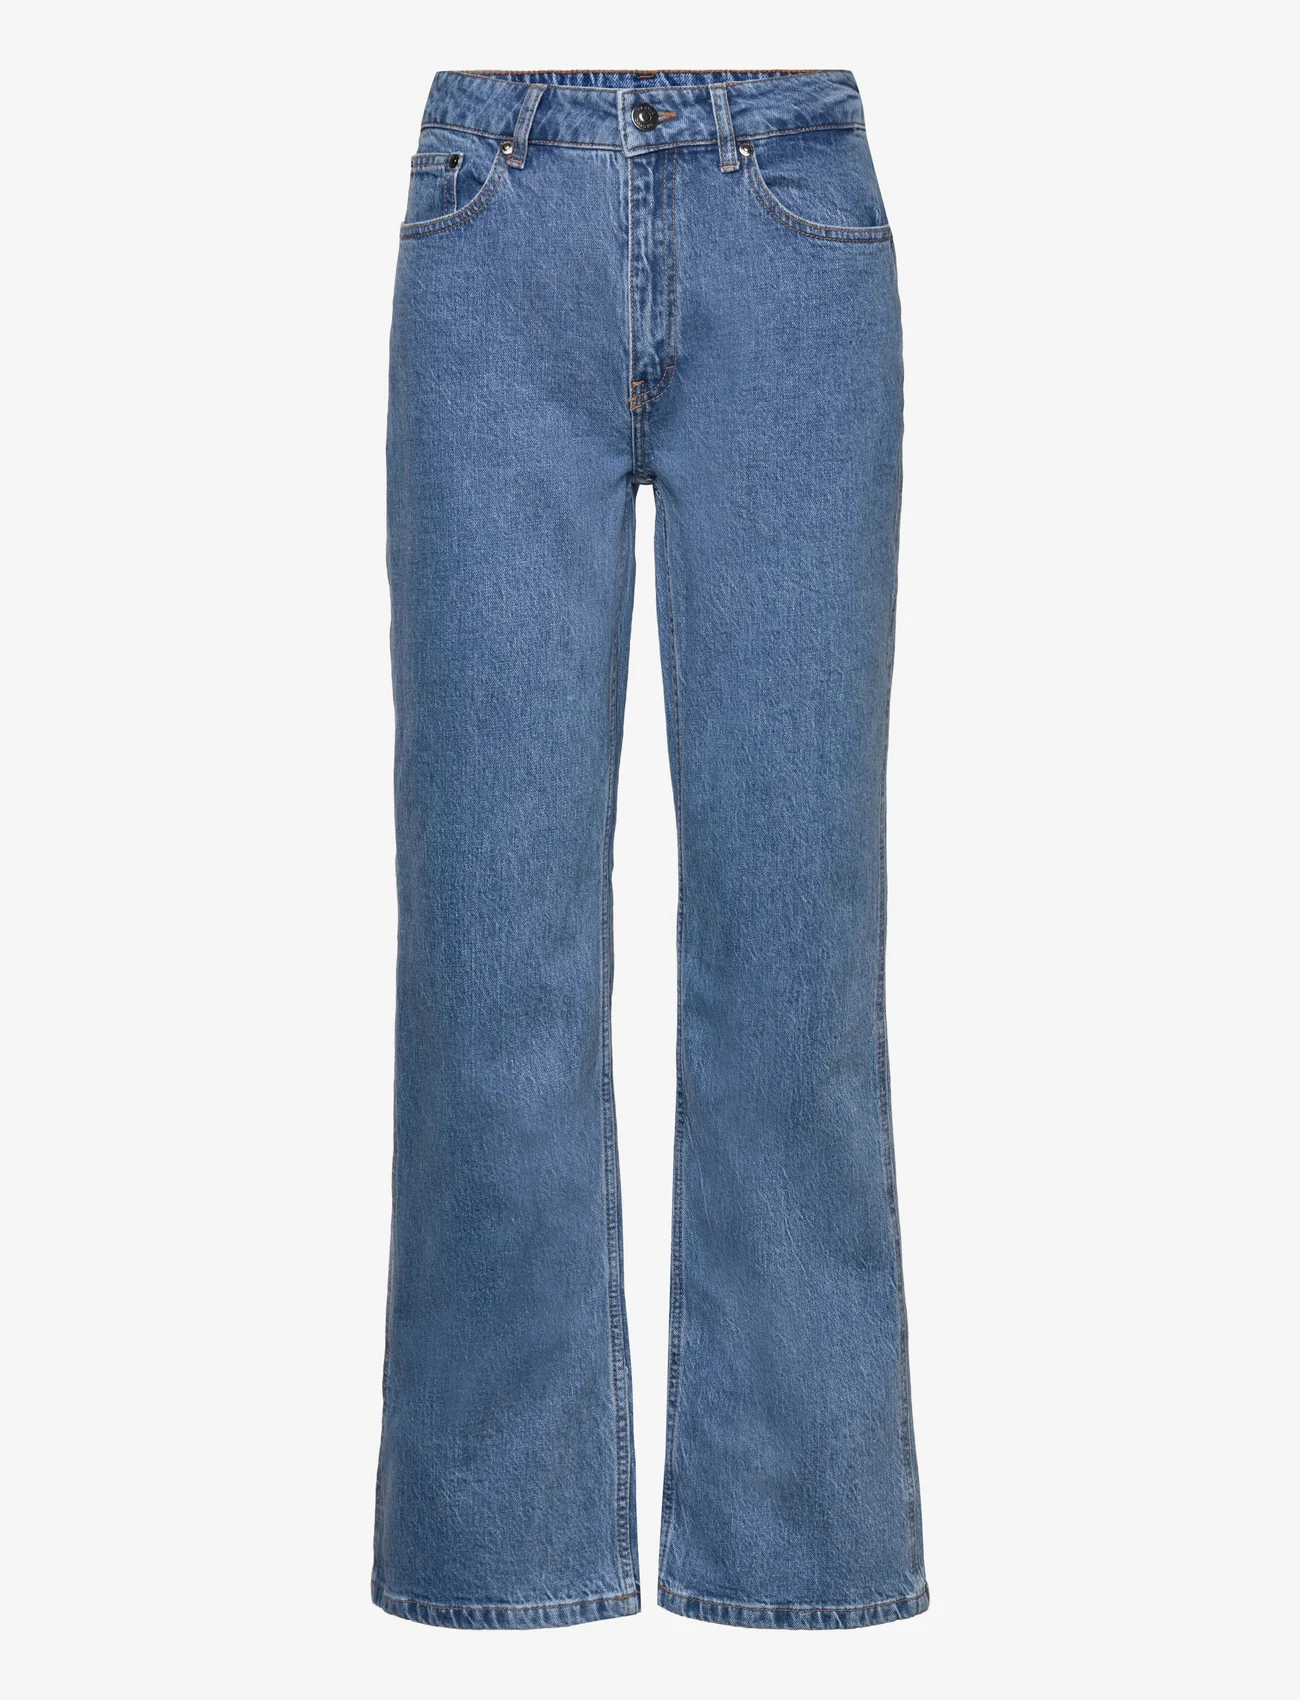 Gestuz - LucieGZ HW straight jeans NOOS - straight jeans - mid dark blue washed - 0